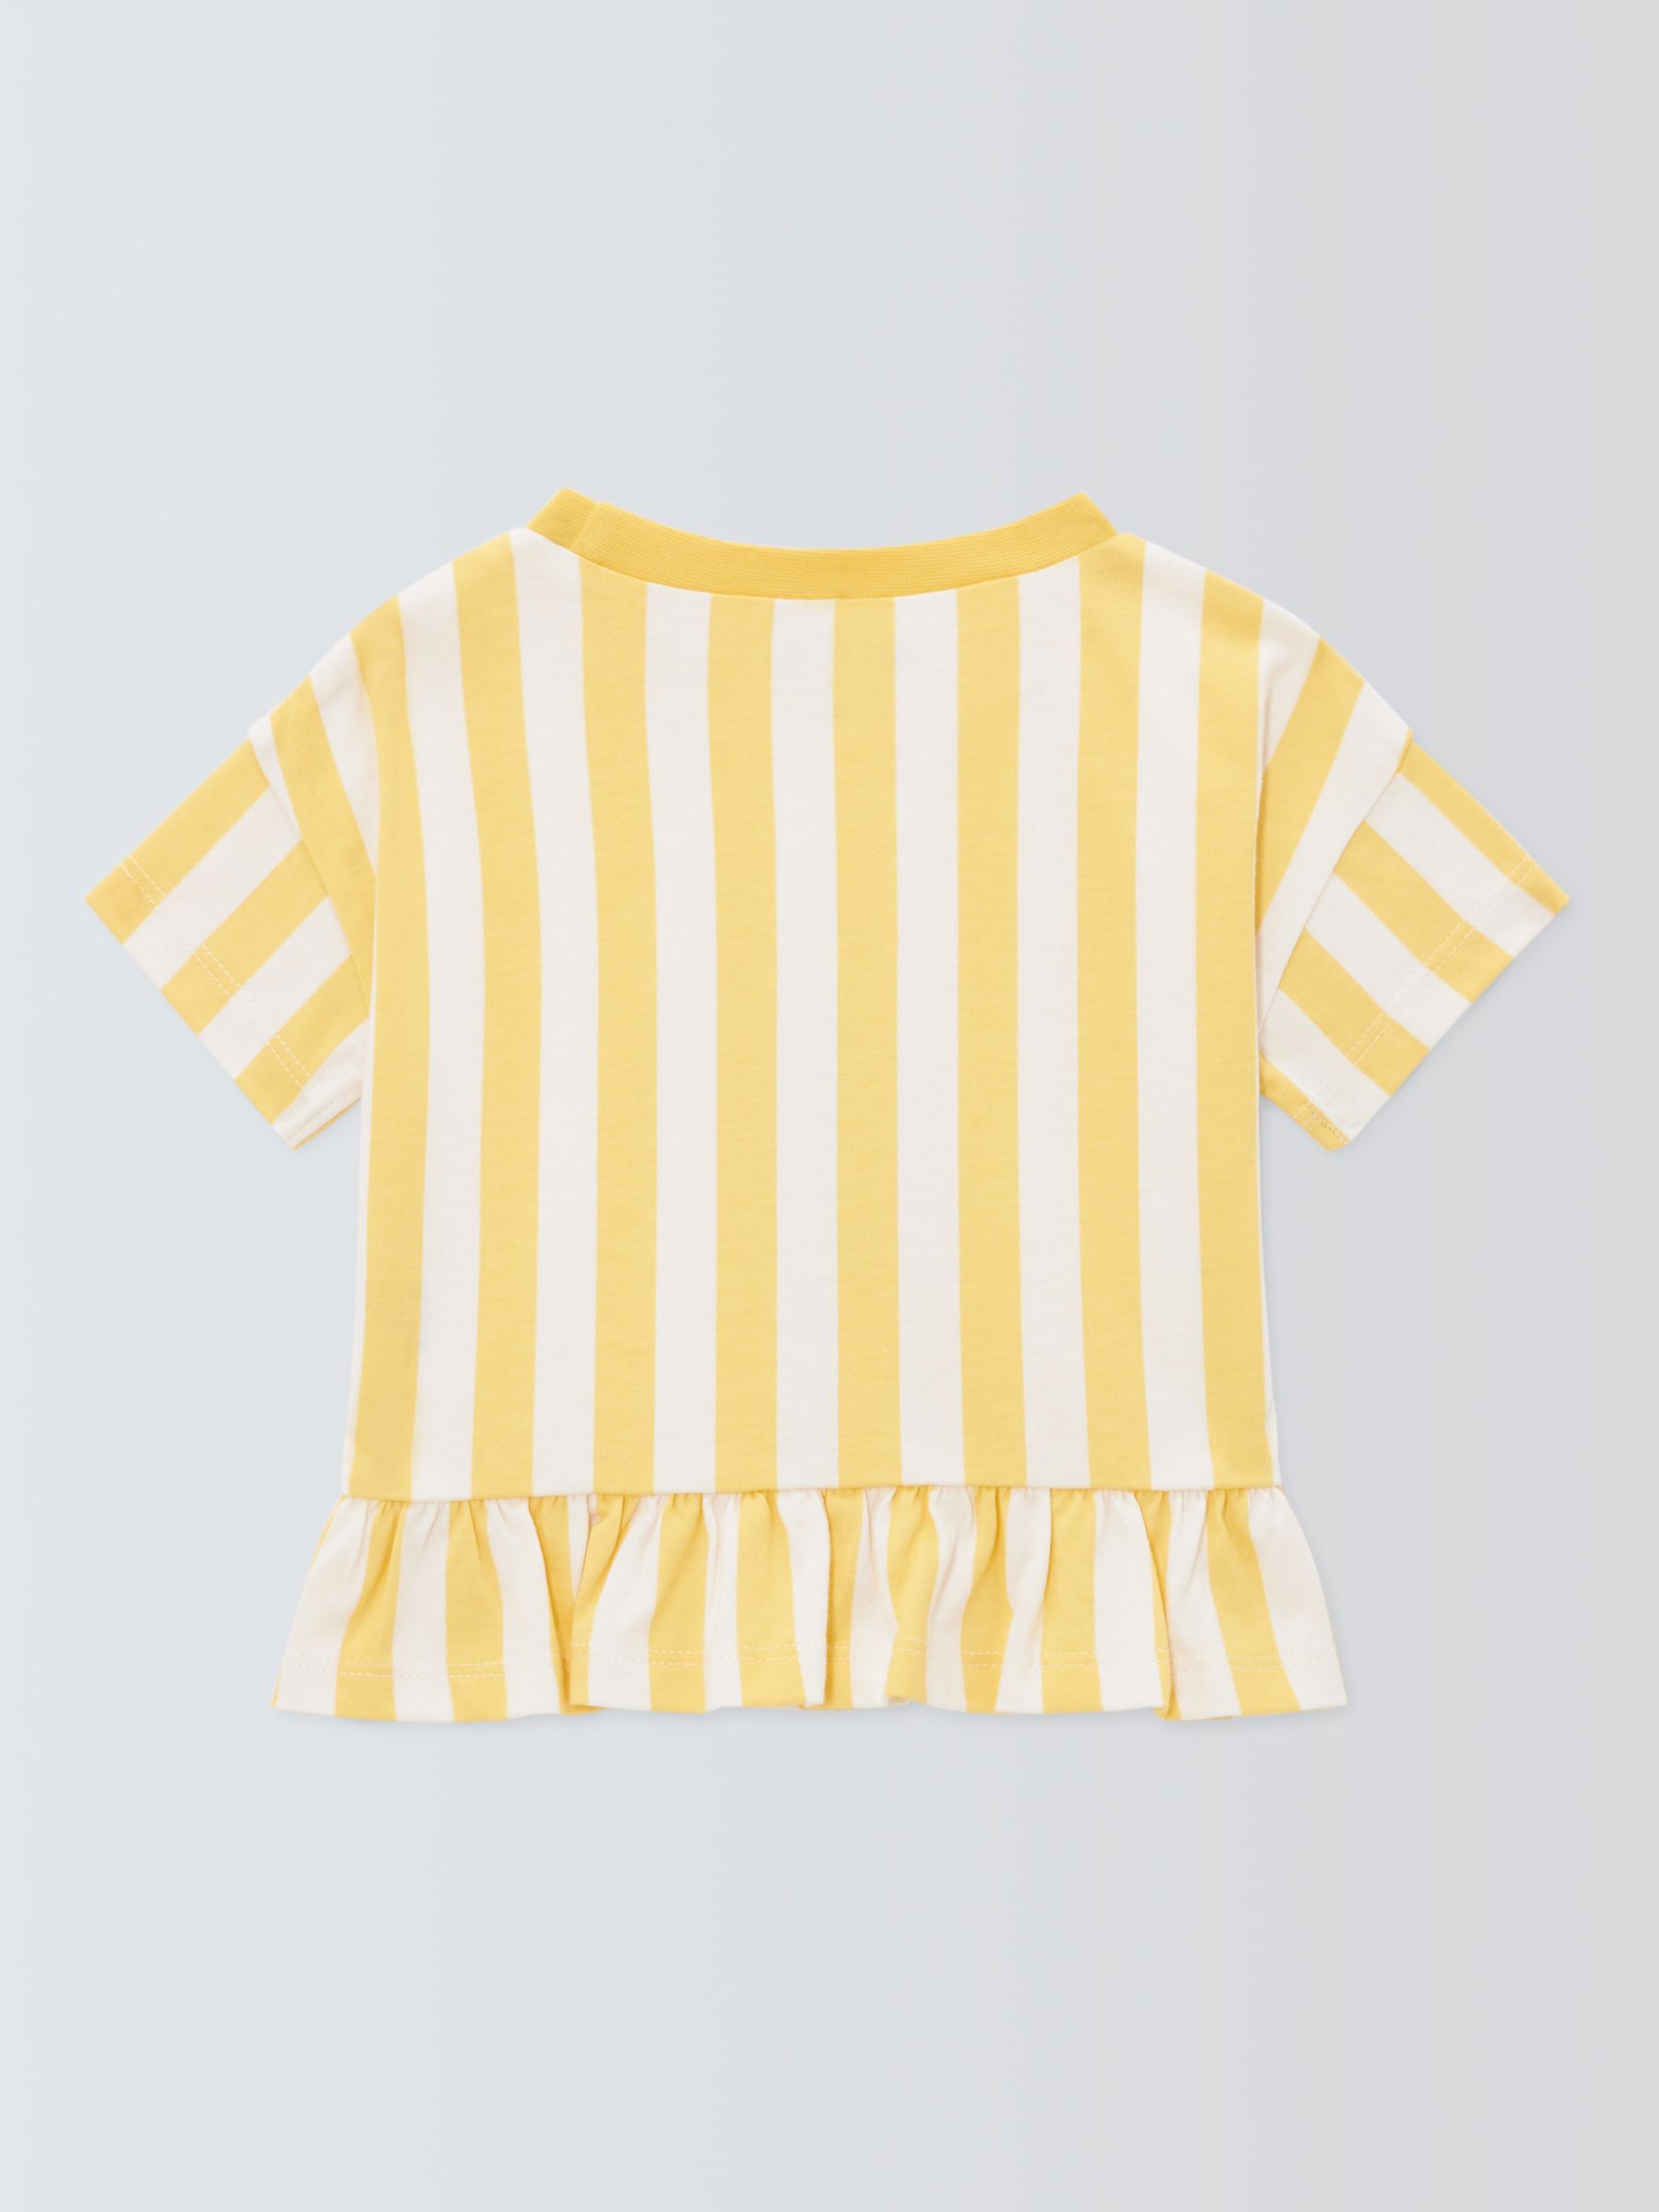 John Lewis ANYDAY Baby Ice Cream Stripe Top, Yellow/Multi, 3-6 months